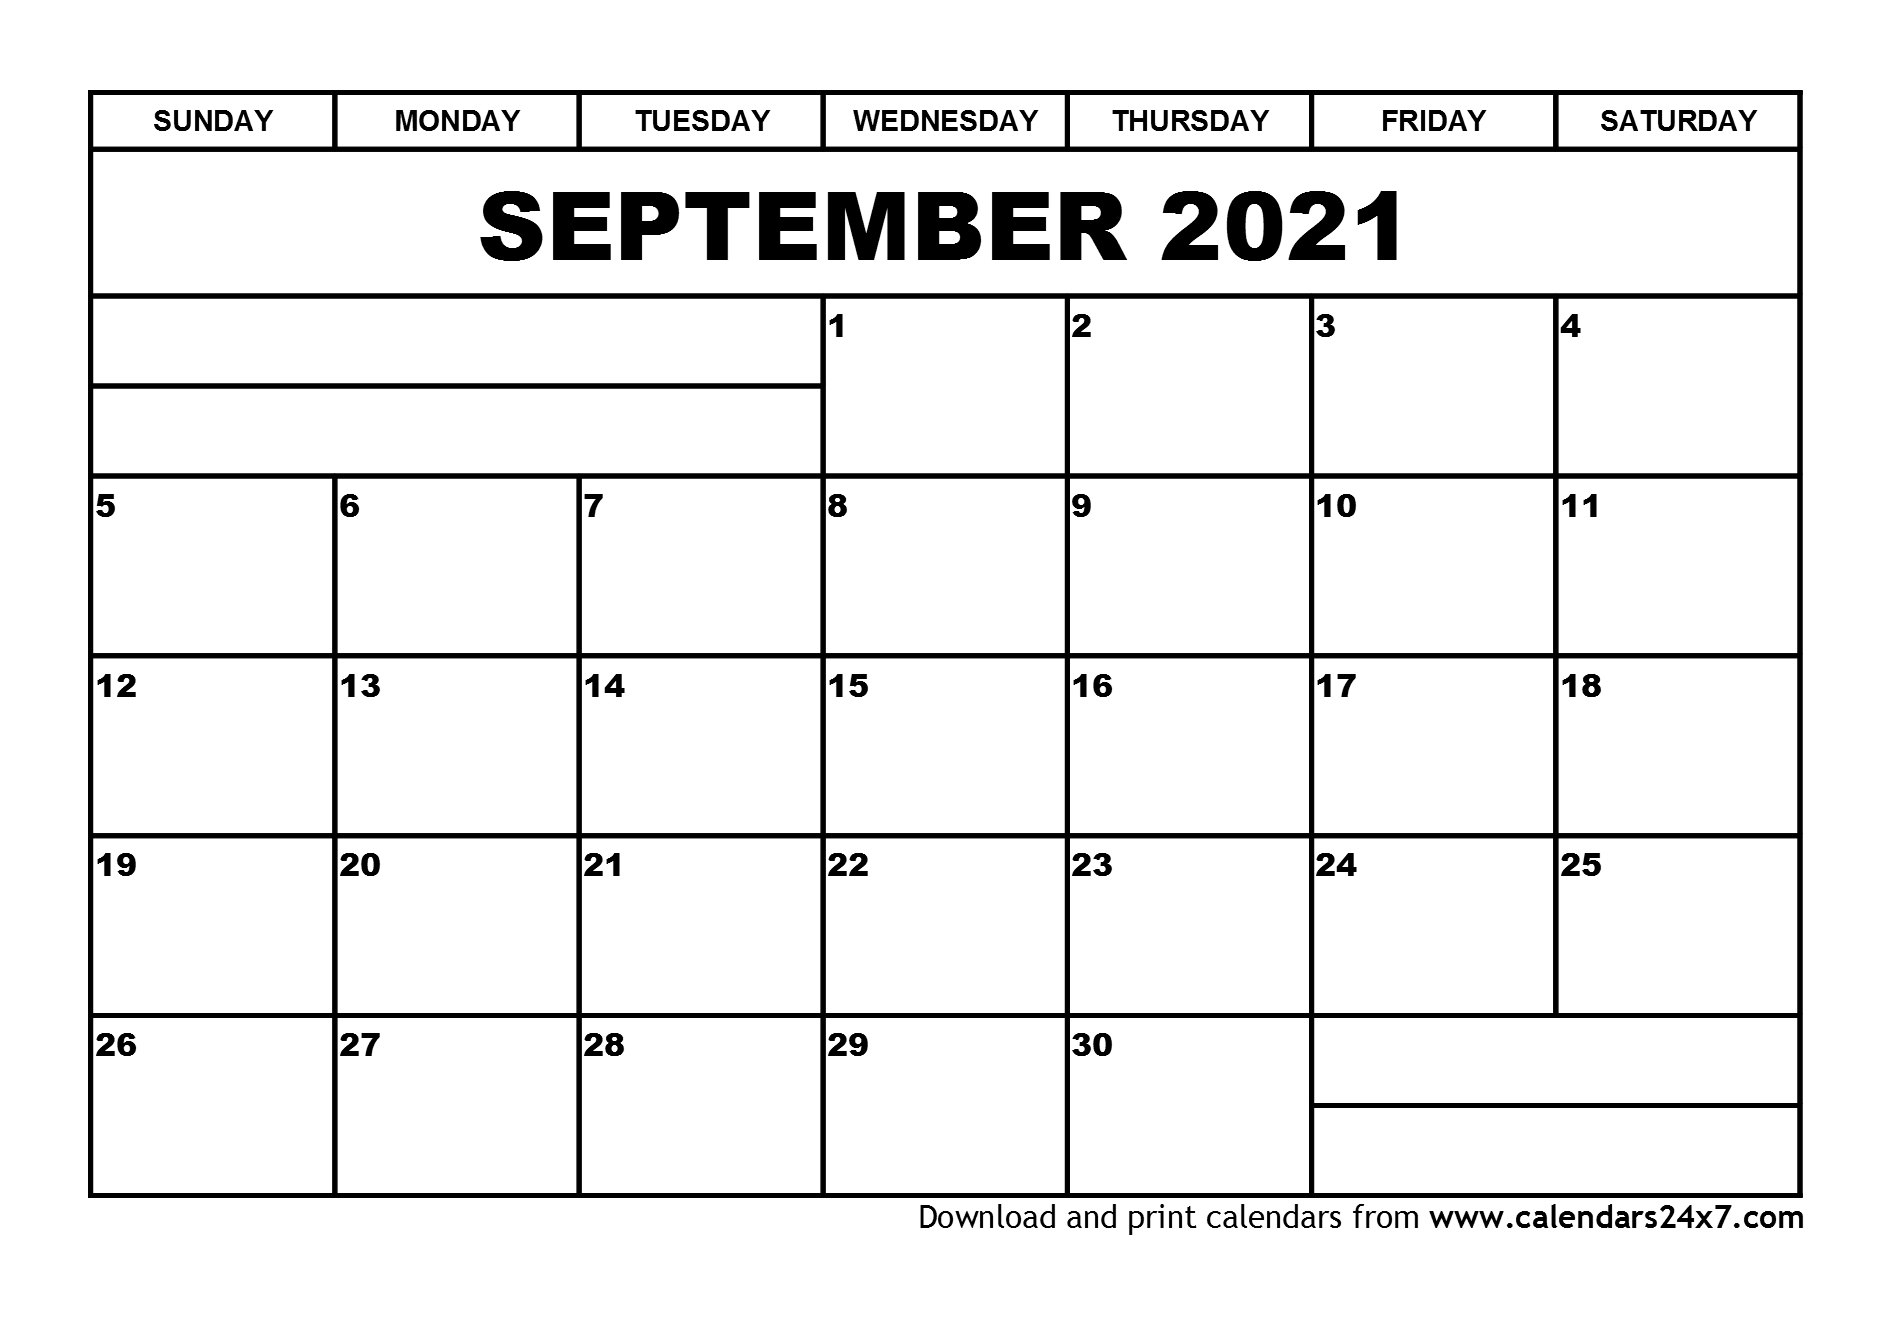 Take Calendar Sept 2021 To August 2022